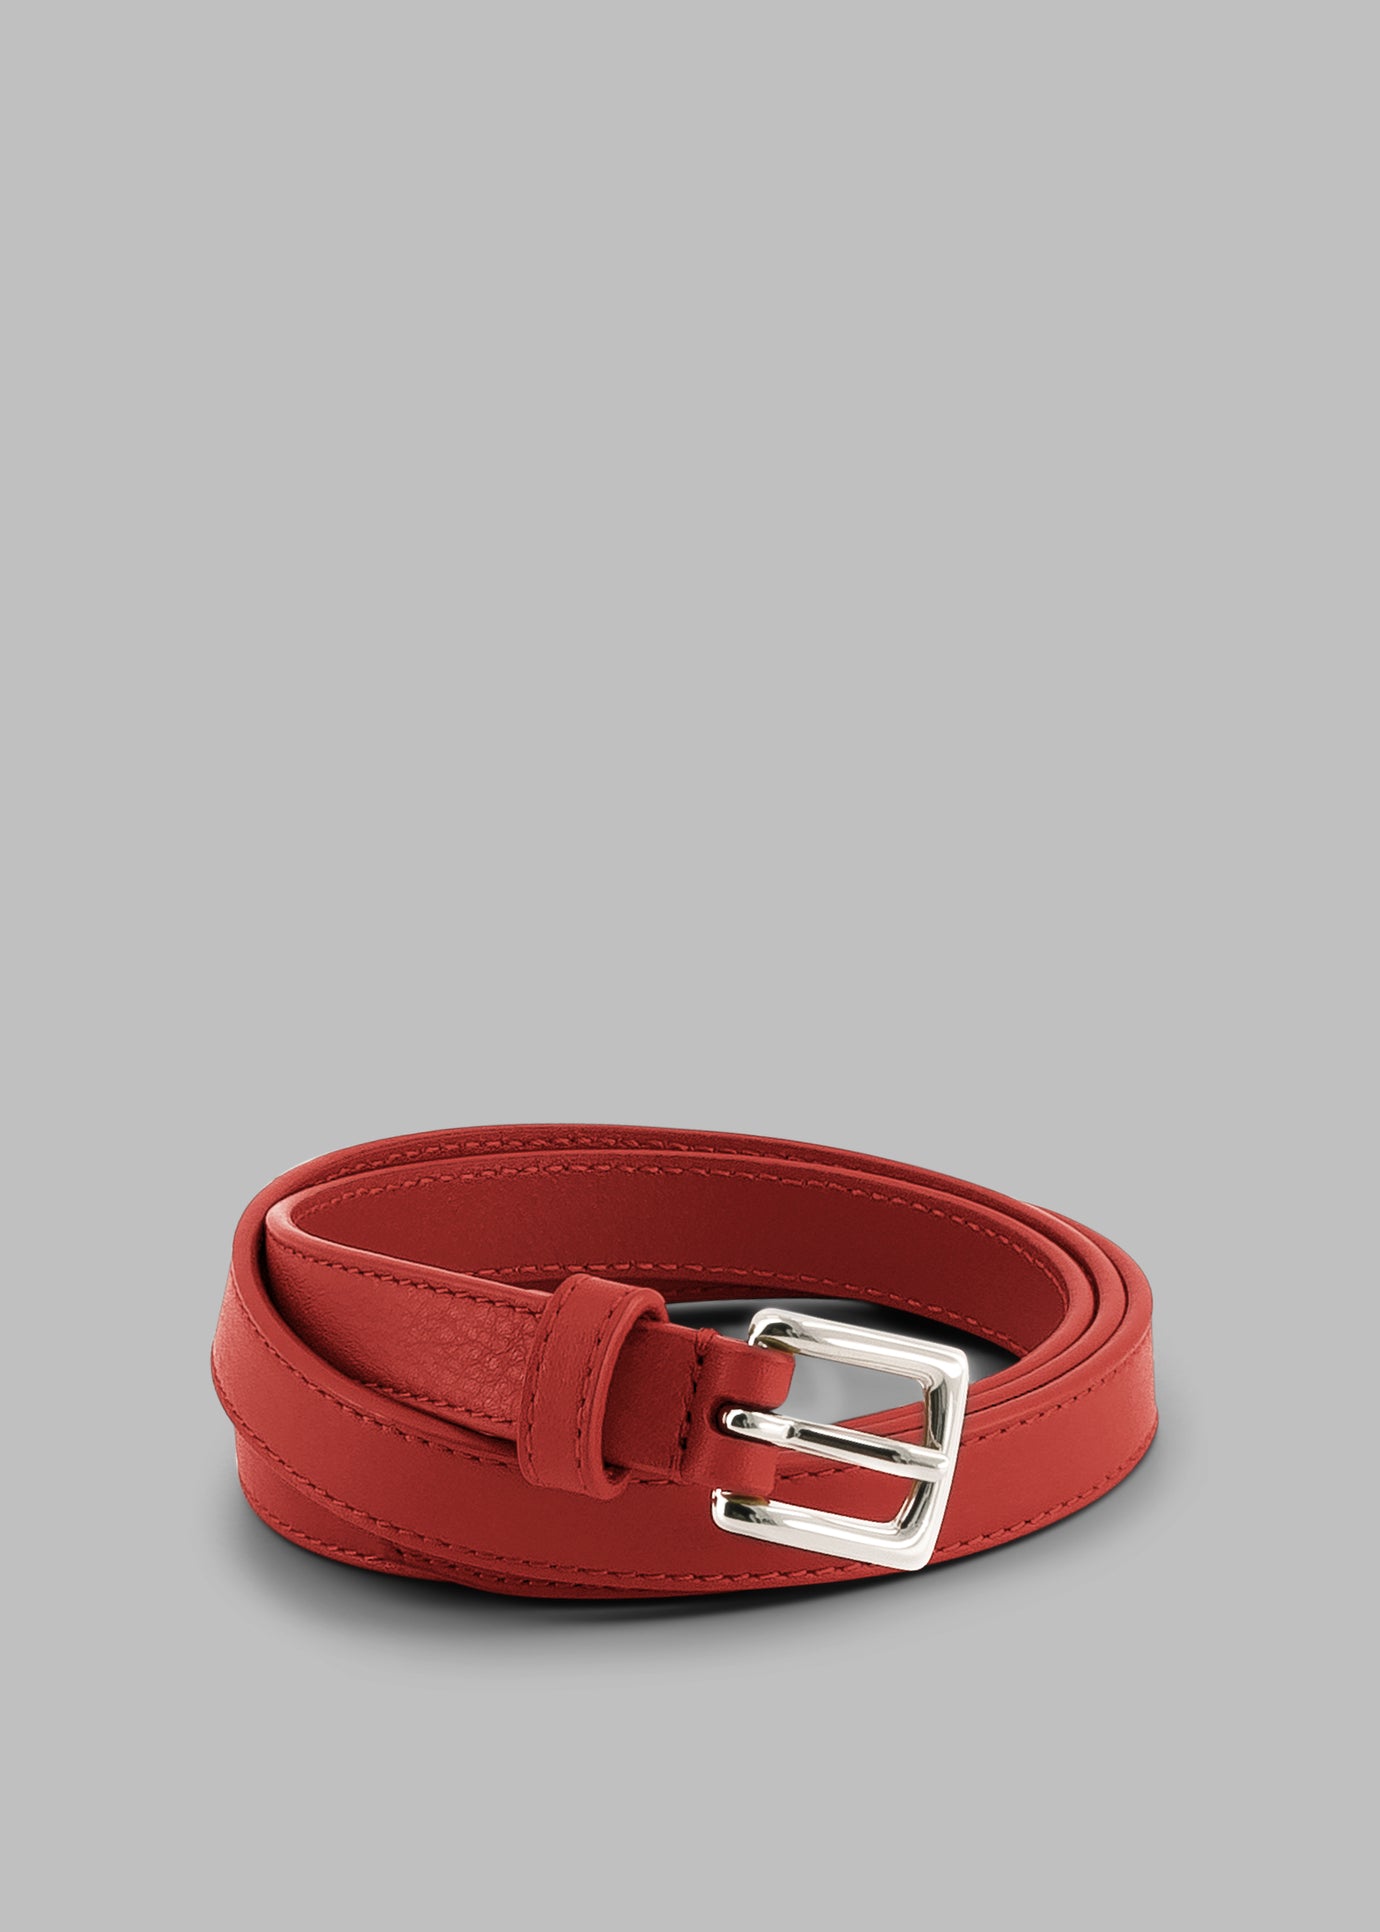 Jessie Leather Belt - Red